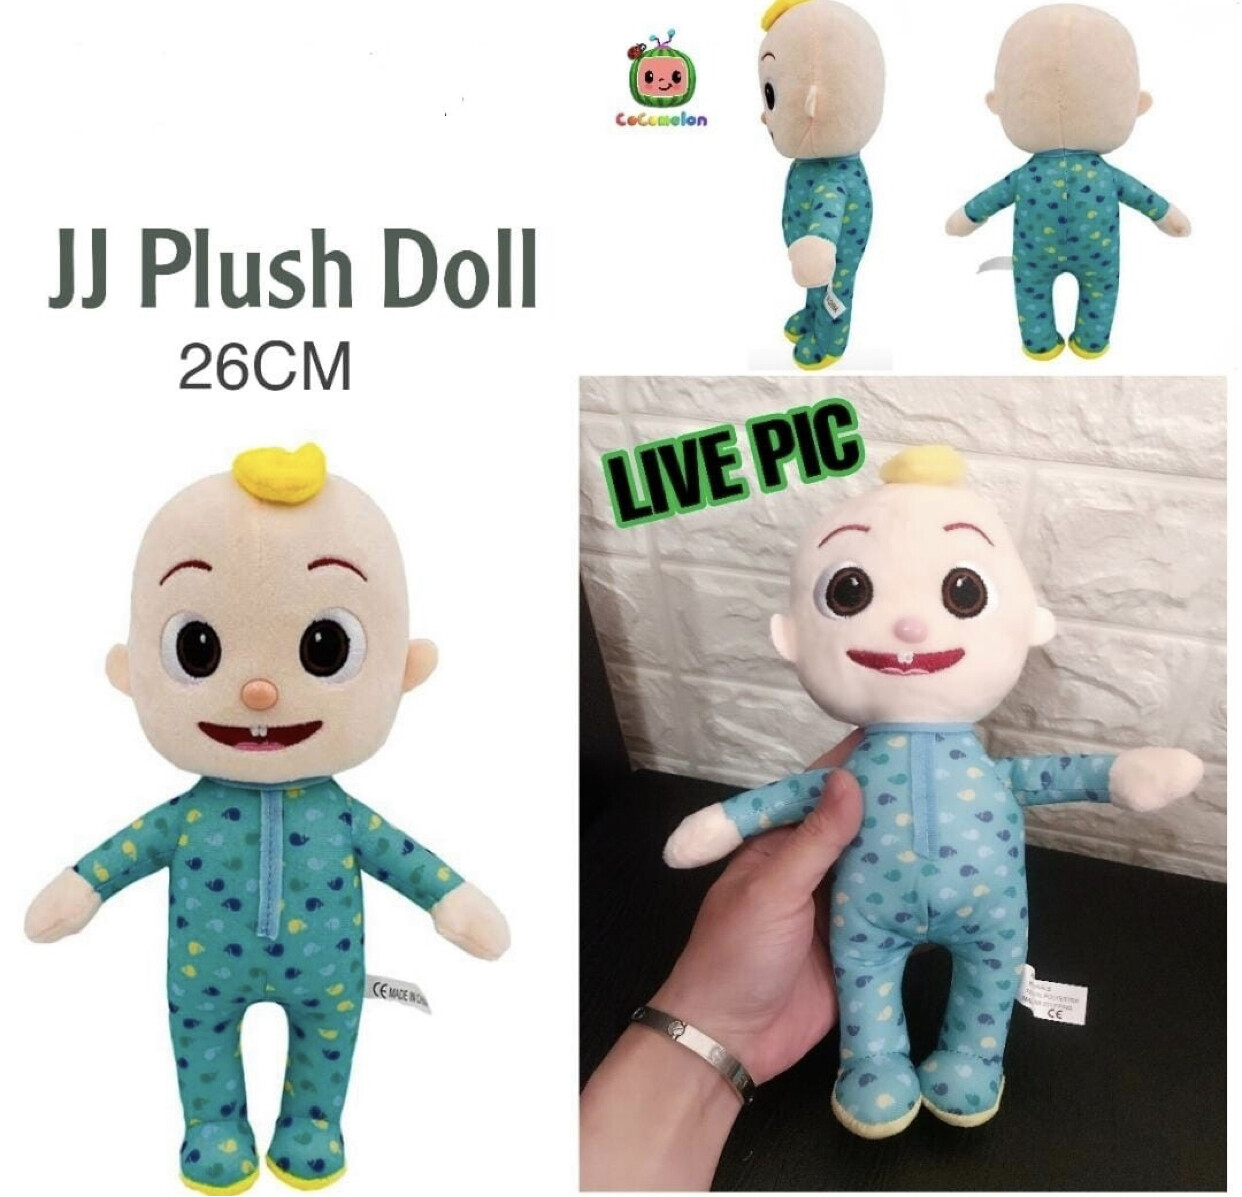 JJ Plush Doll